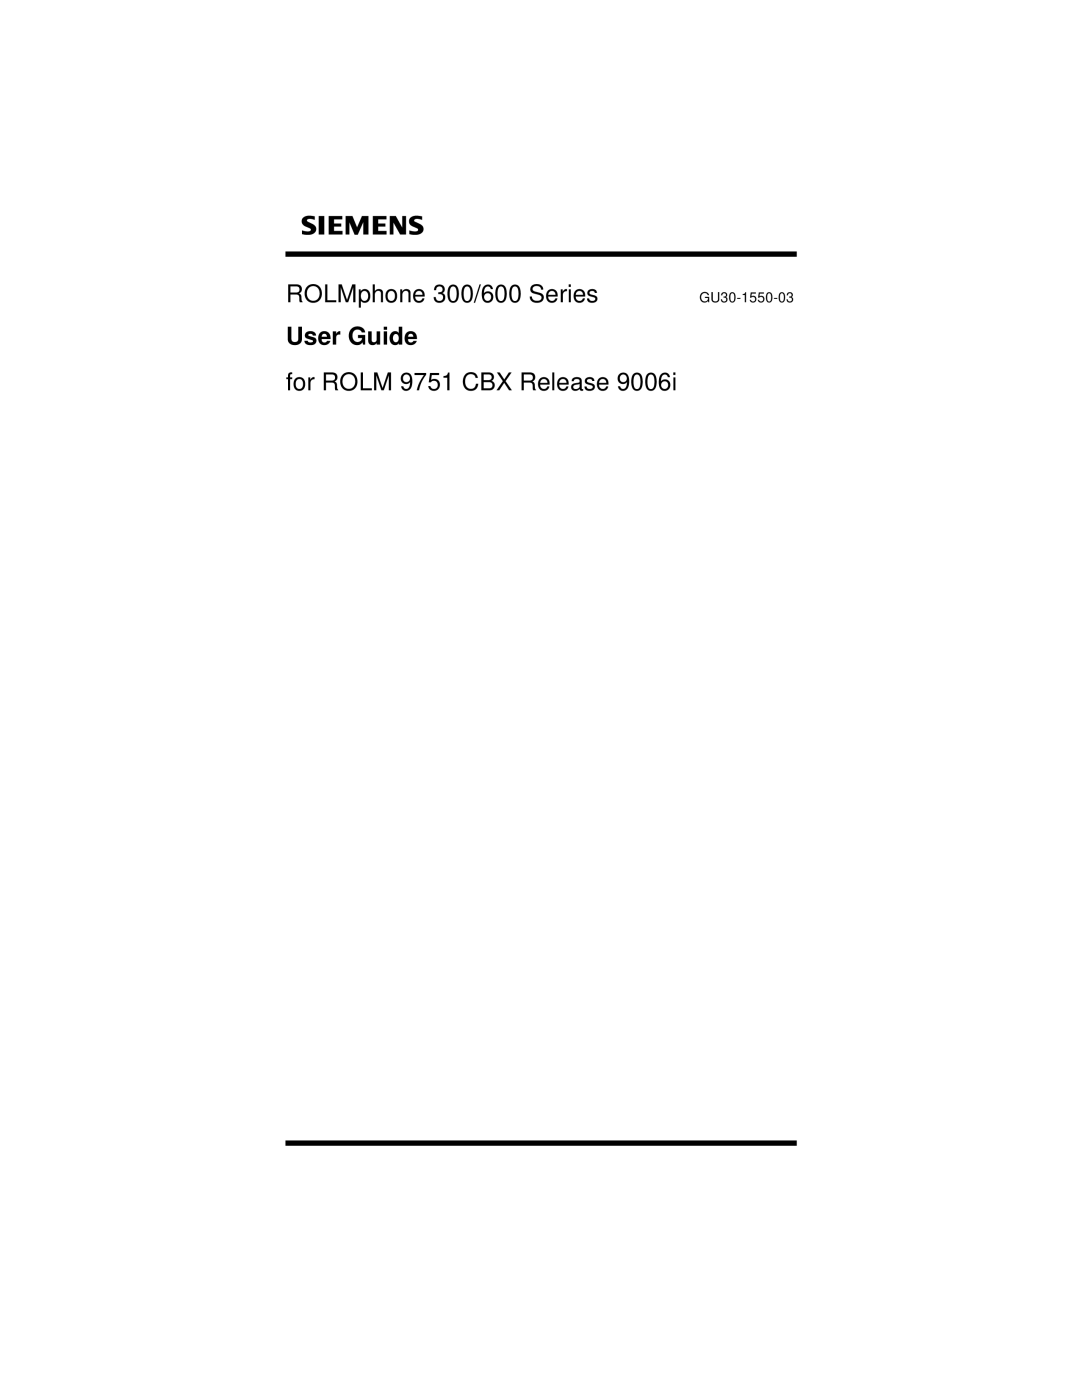 Siemens 300 Series manual User Guide, ROLMphone 300/600 Series, for ROLM 9751 CBX Release, GU30-1550-03 